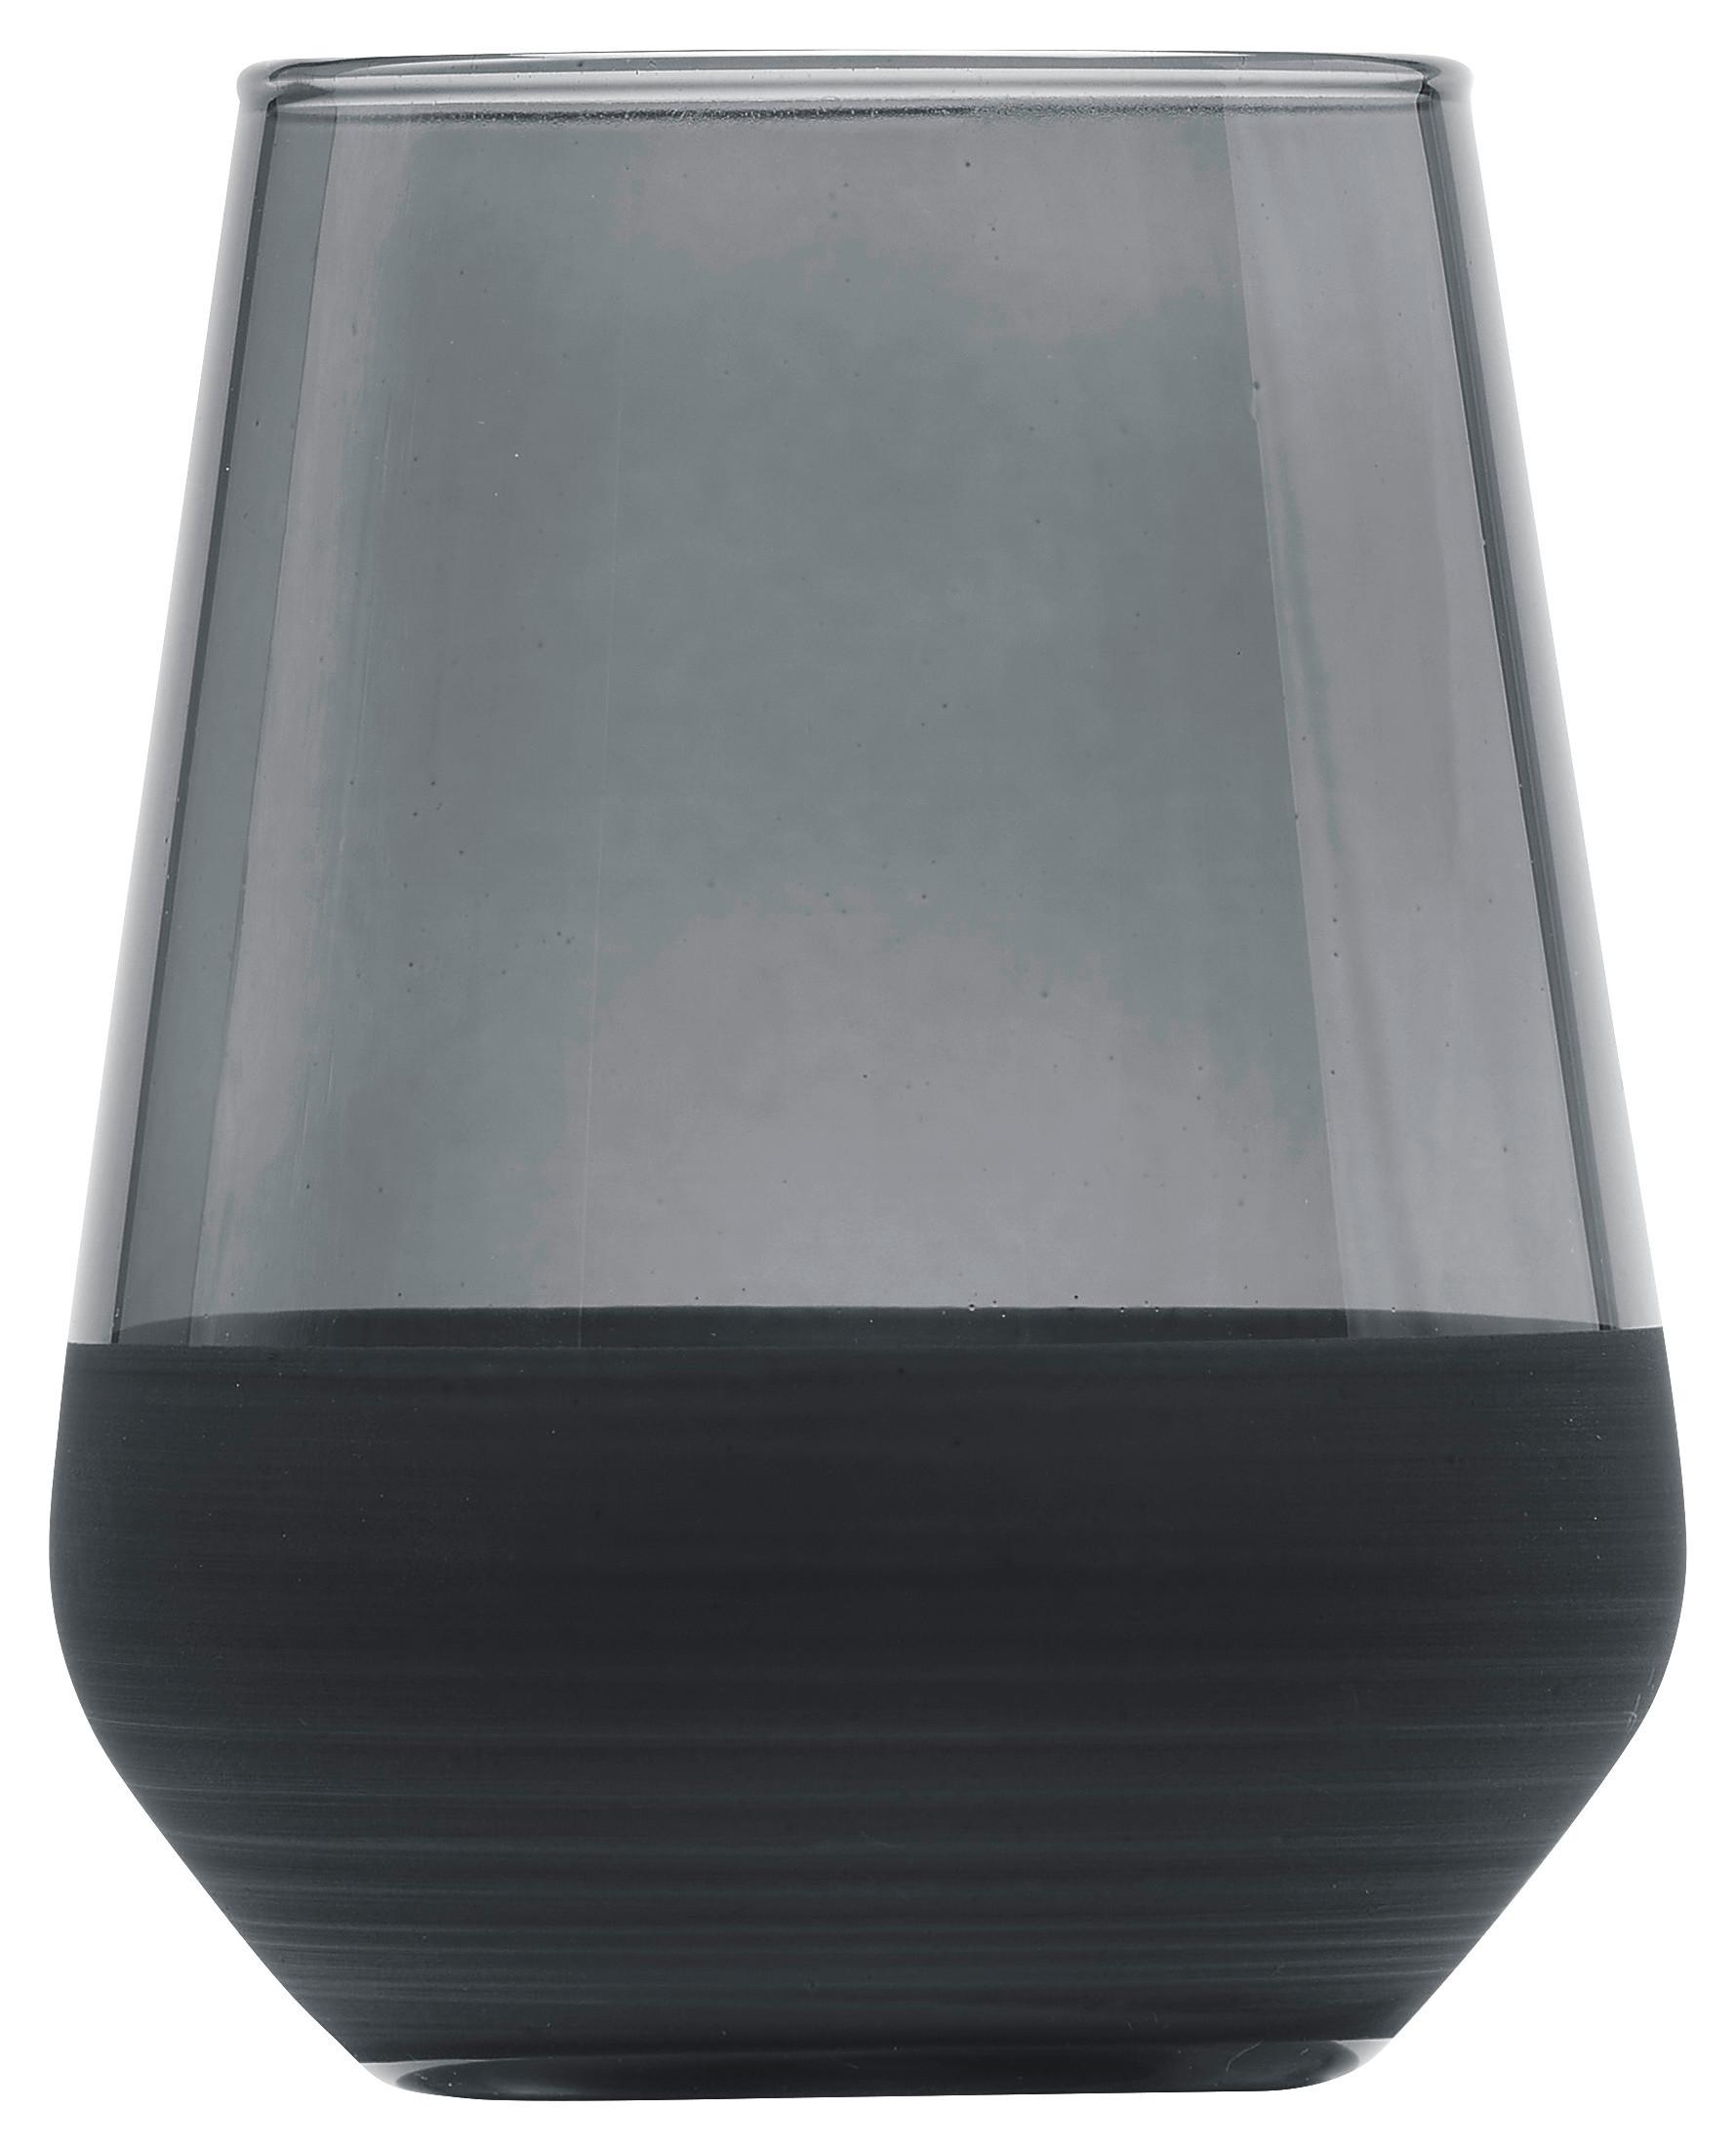 Sklenička Black, 425ml - černá, Moderní, sklo (6,8/11cm) - Premium Living